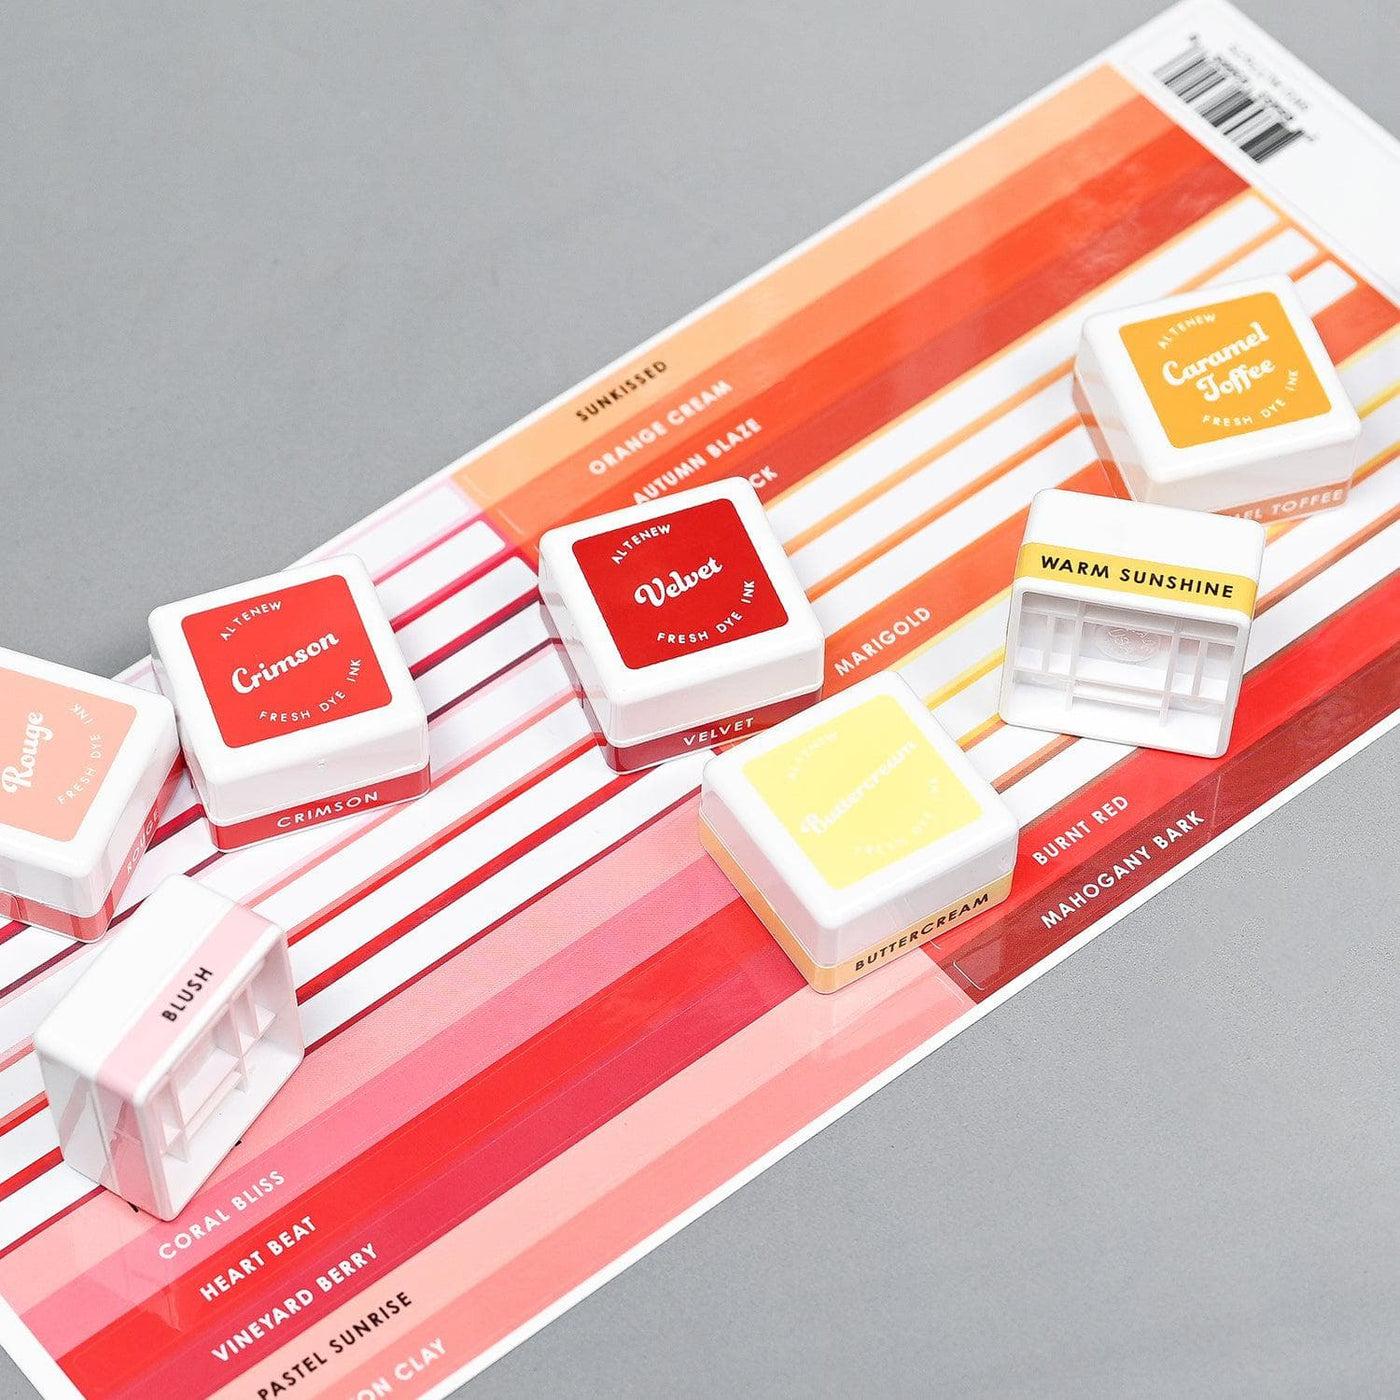 Misil Craft Decals Mini Ink Cube Label Set - All Crisp Dye Ink Colors (6 Sheets)